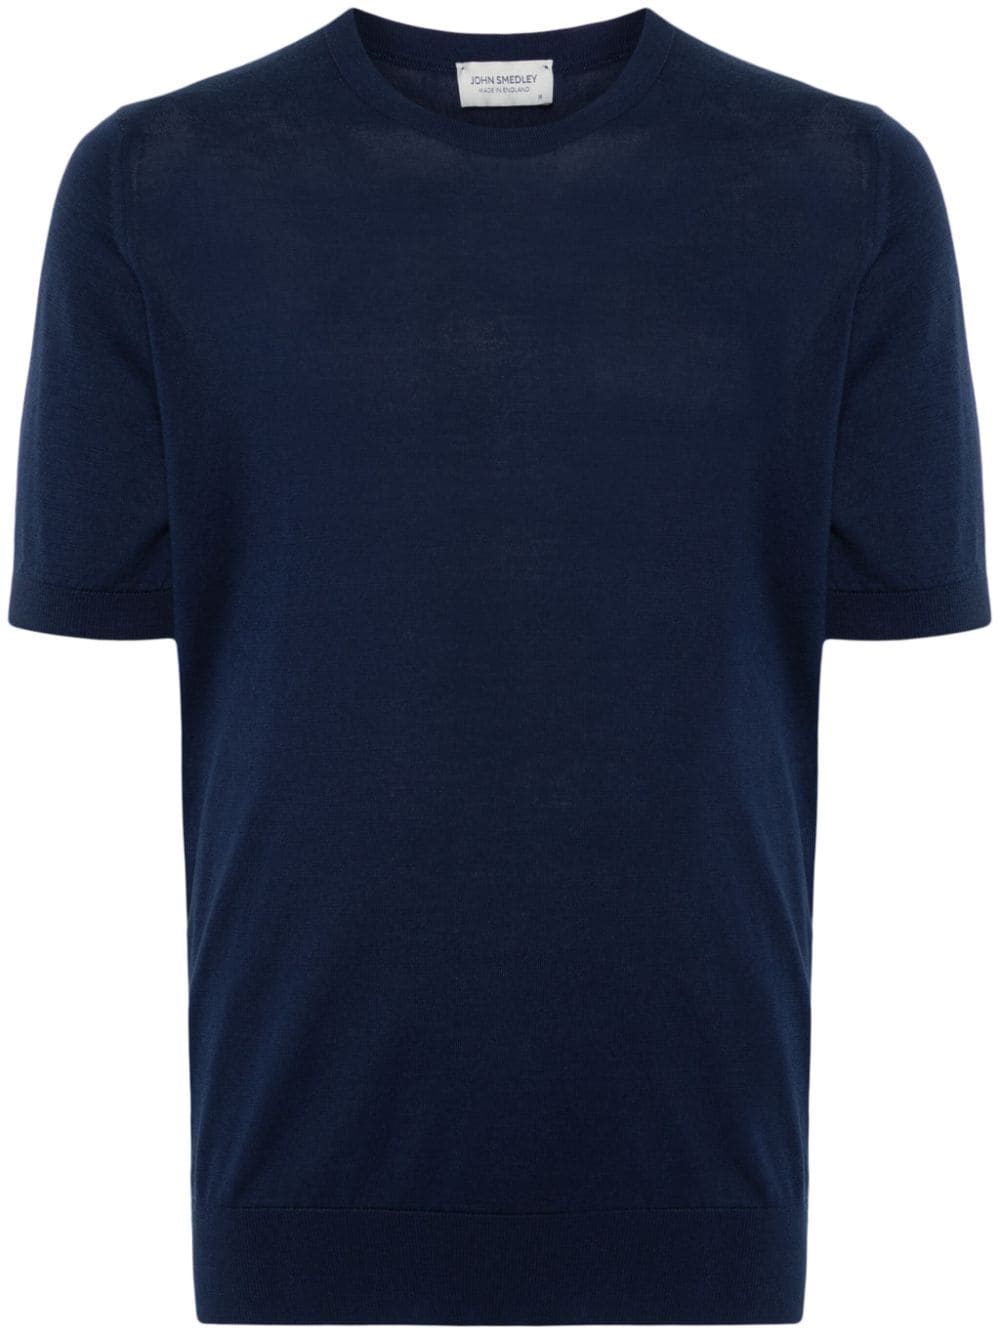 John Smedley Gestricktes Kempton T-Shirt - Blau von John Smedley